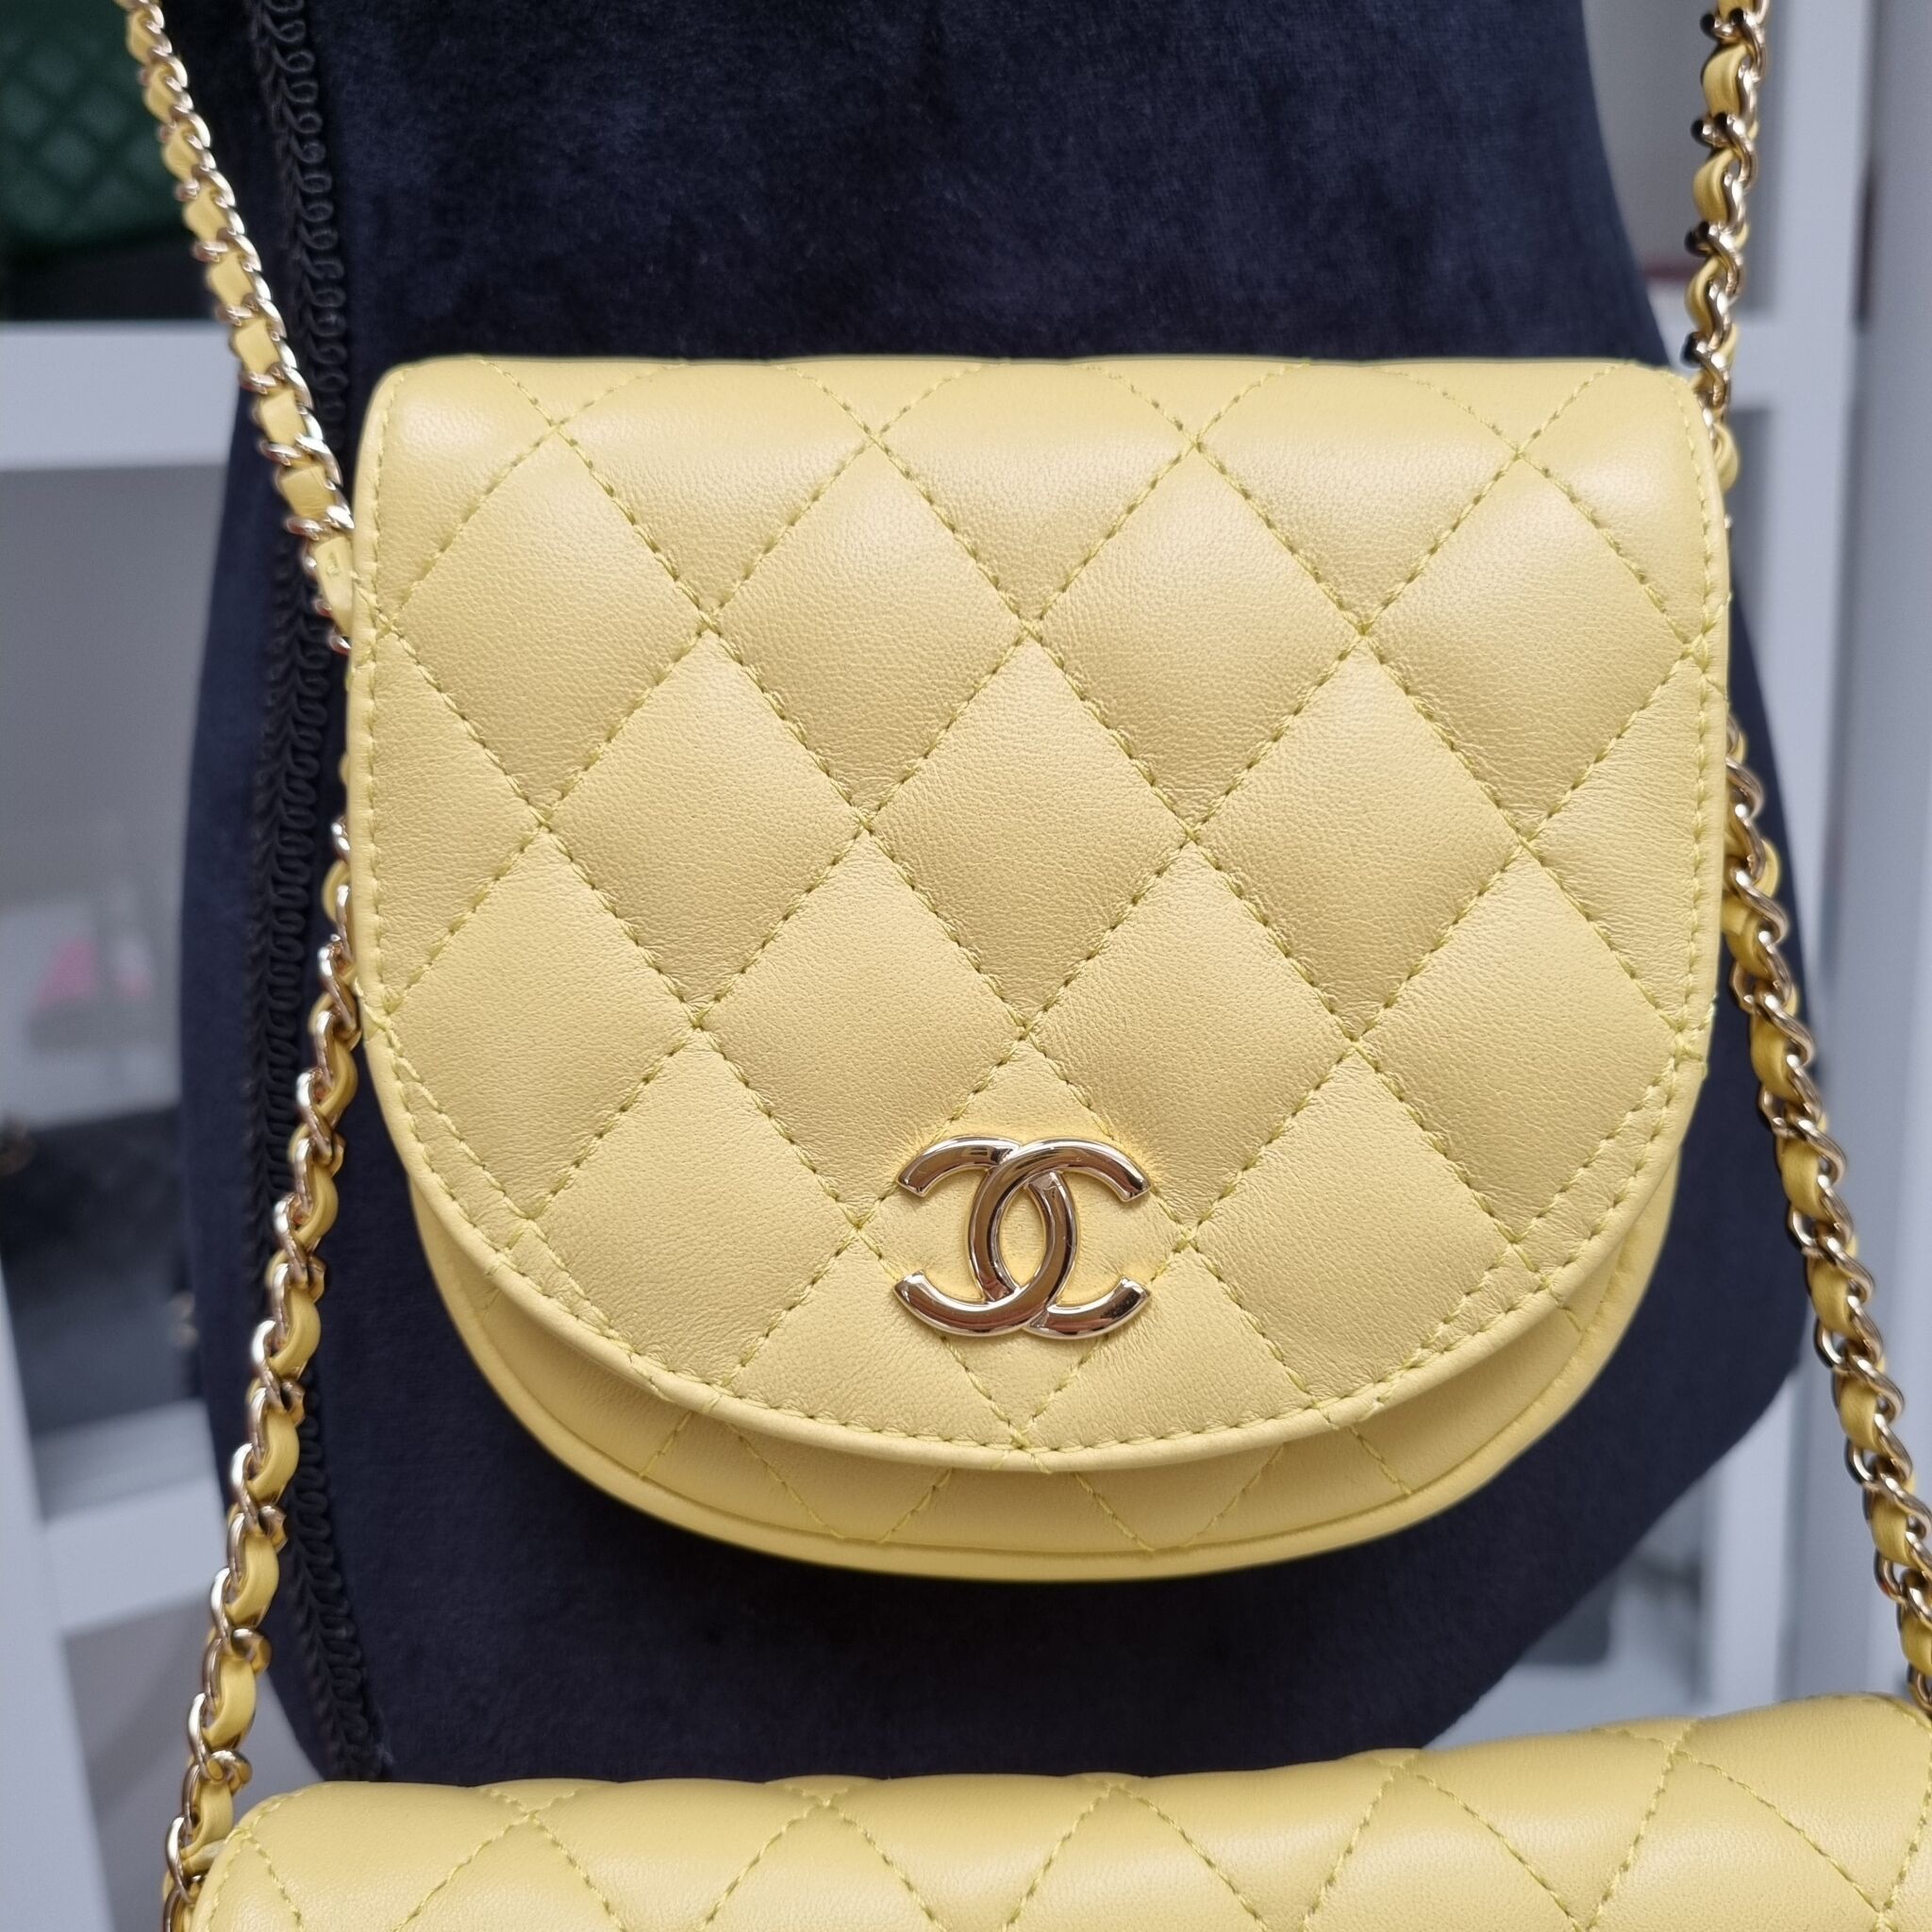 Chanel Side-Packs Bag, Lambskin, Yellow GHW - Laulay Luxury